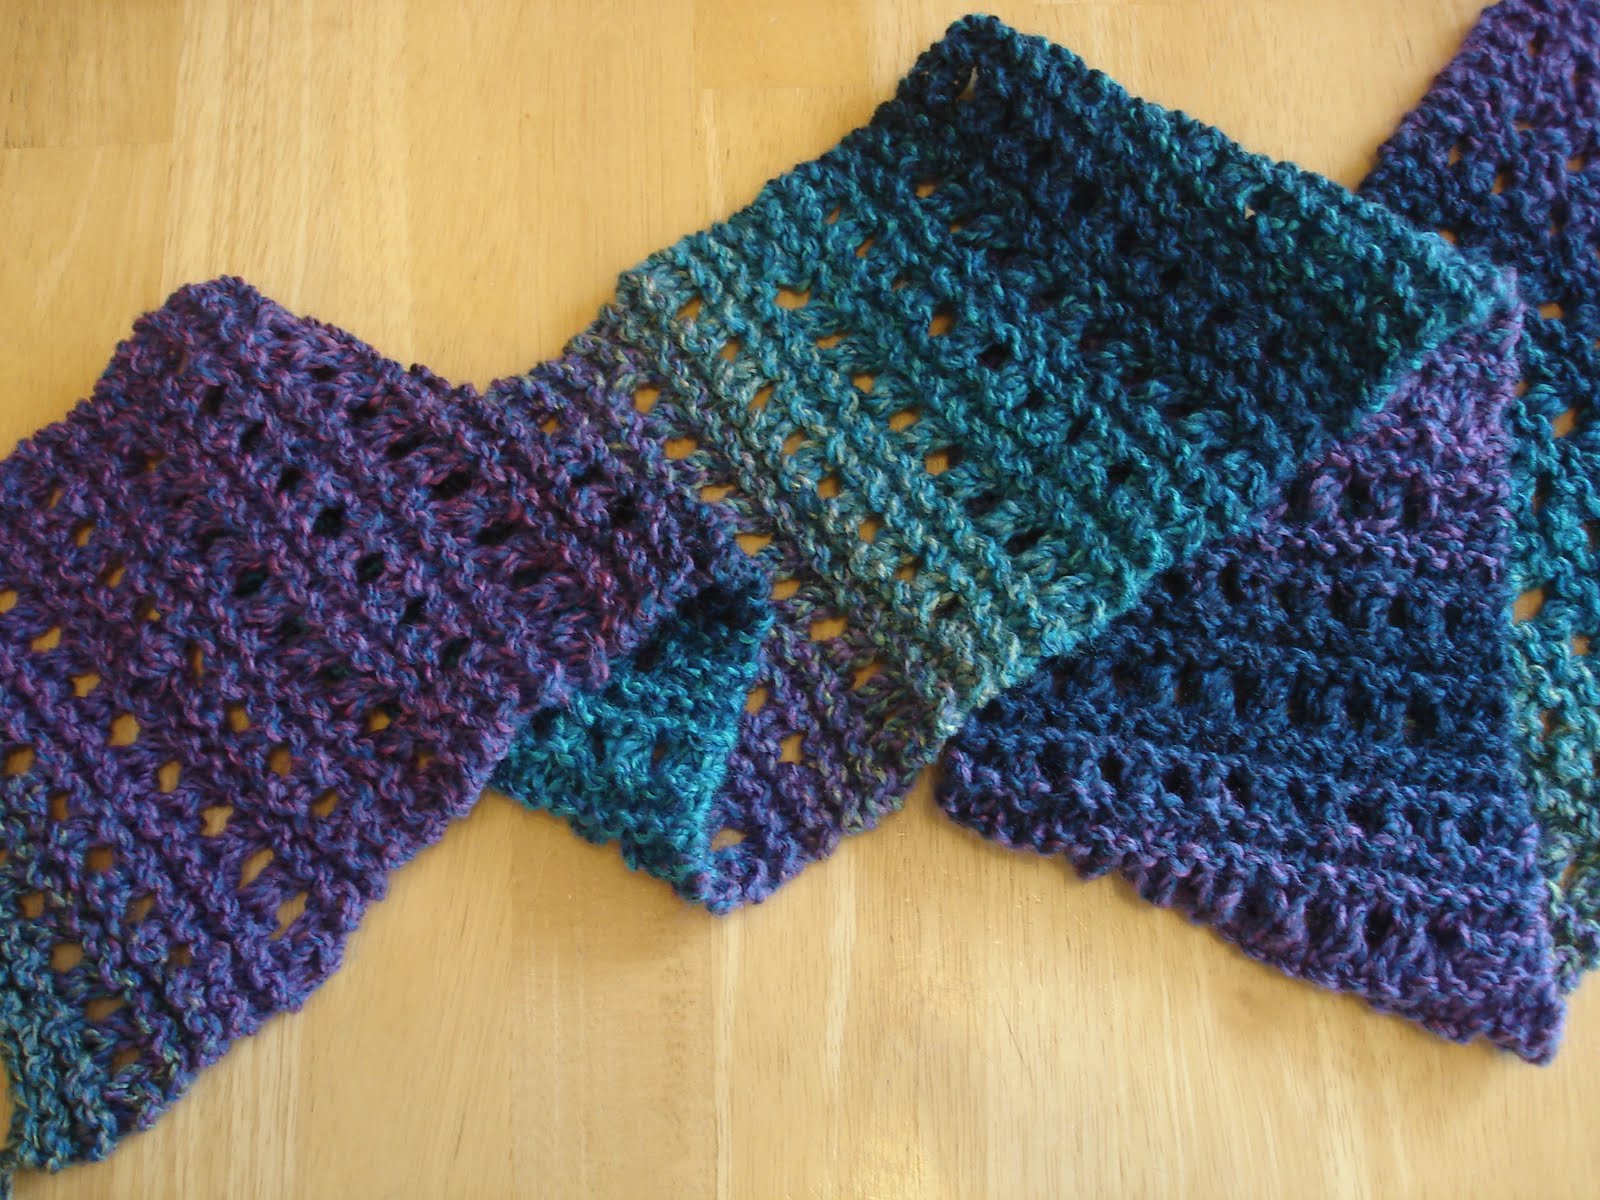 knitting patterns for scarves free knitting patterns. tweedy eyelet scarf vrvlbze